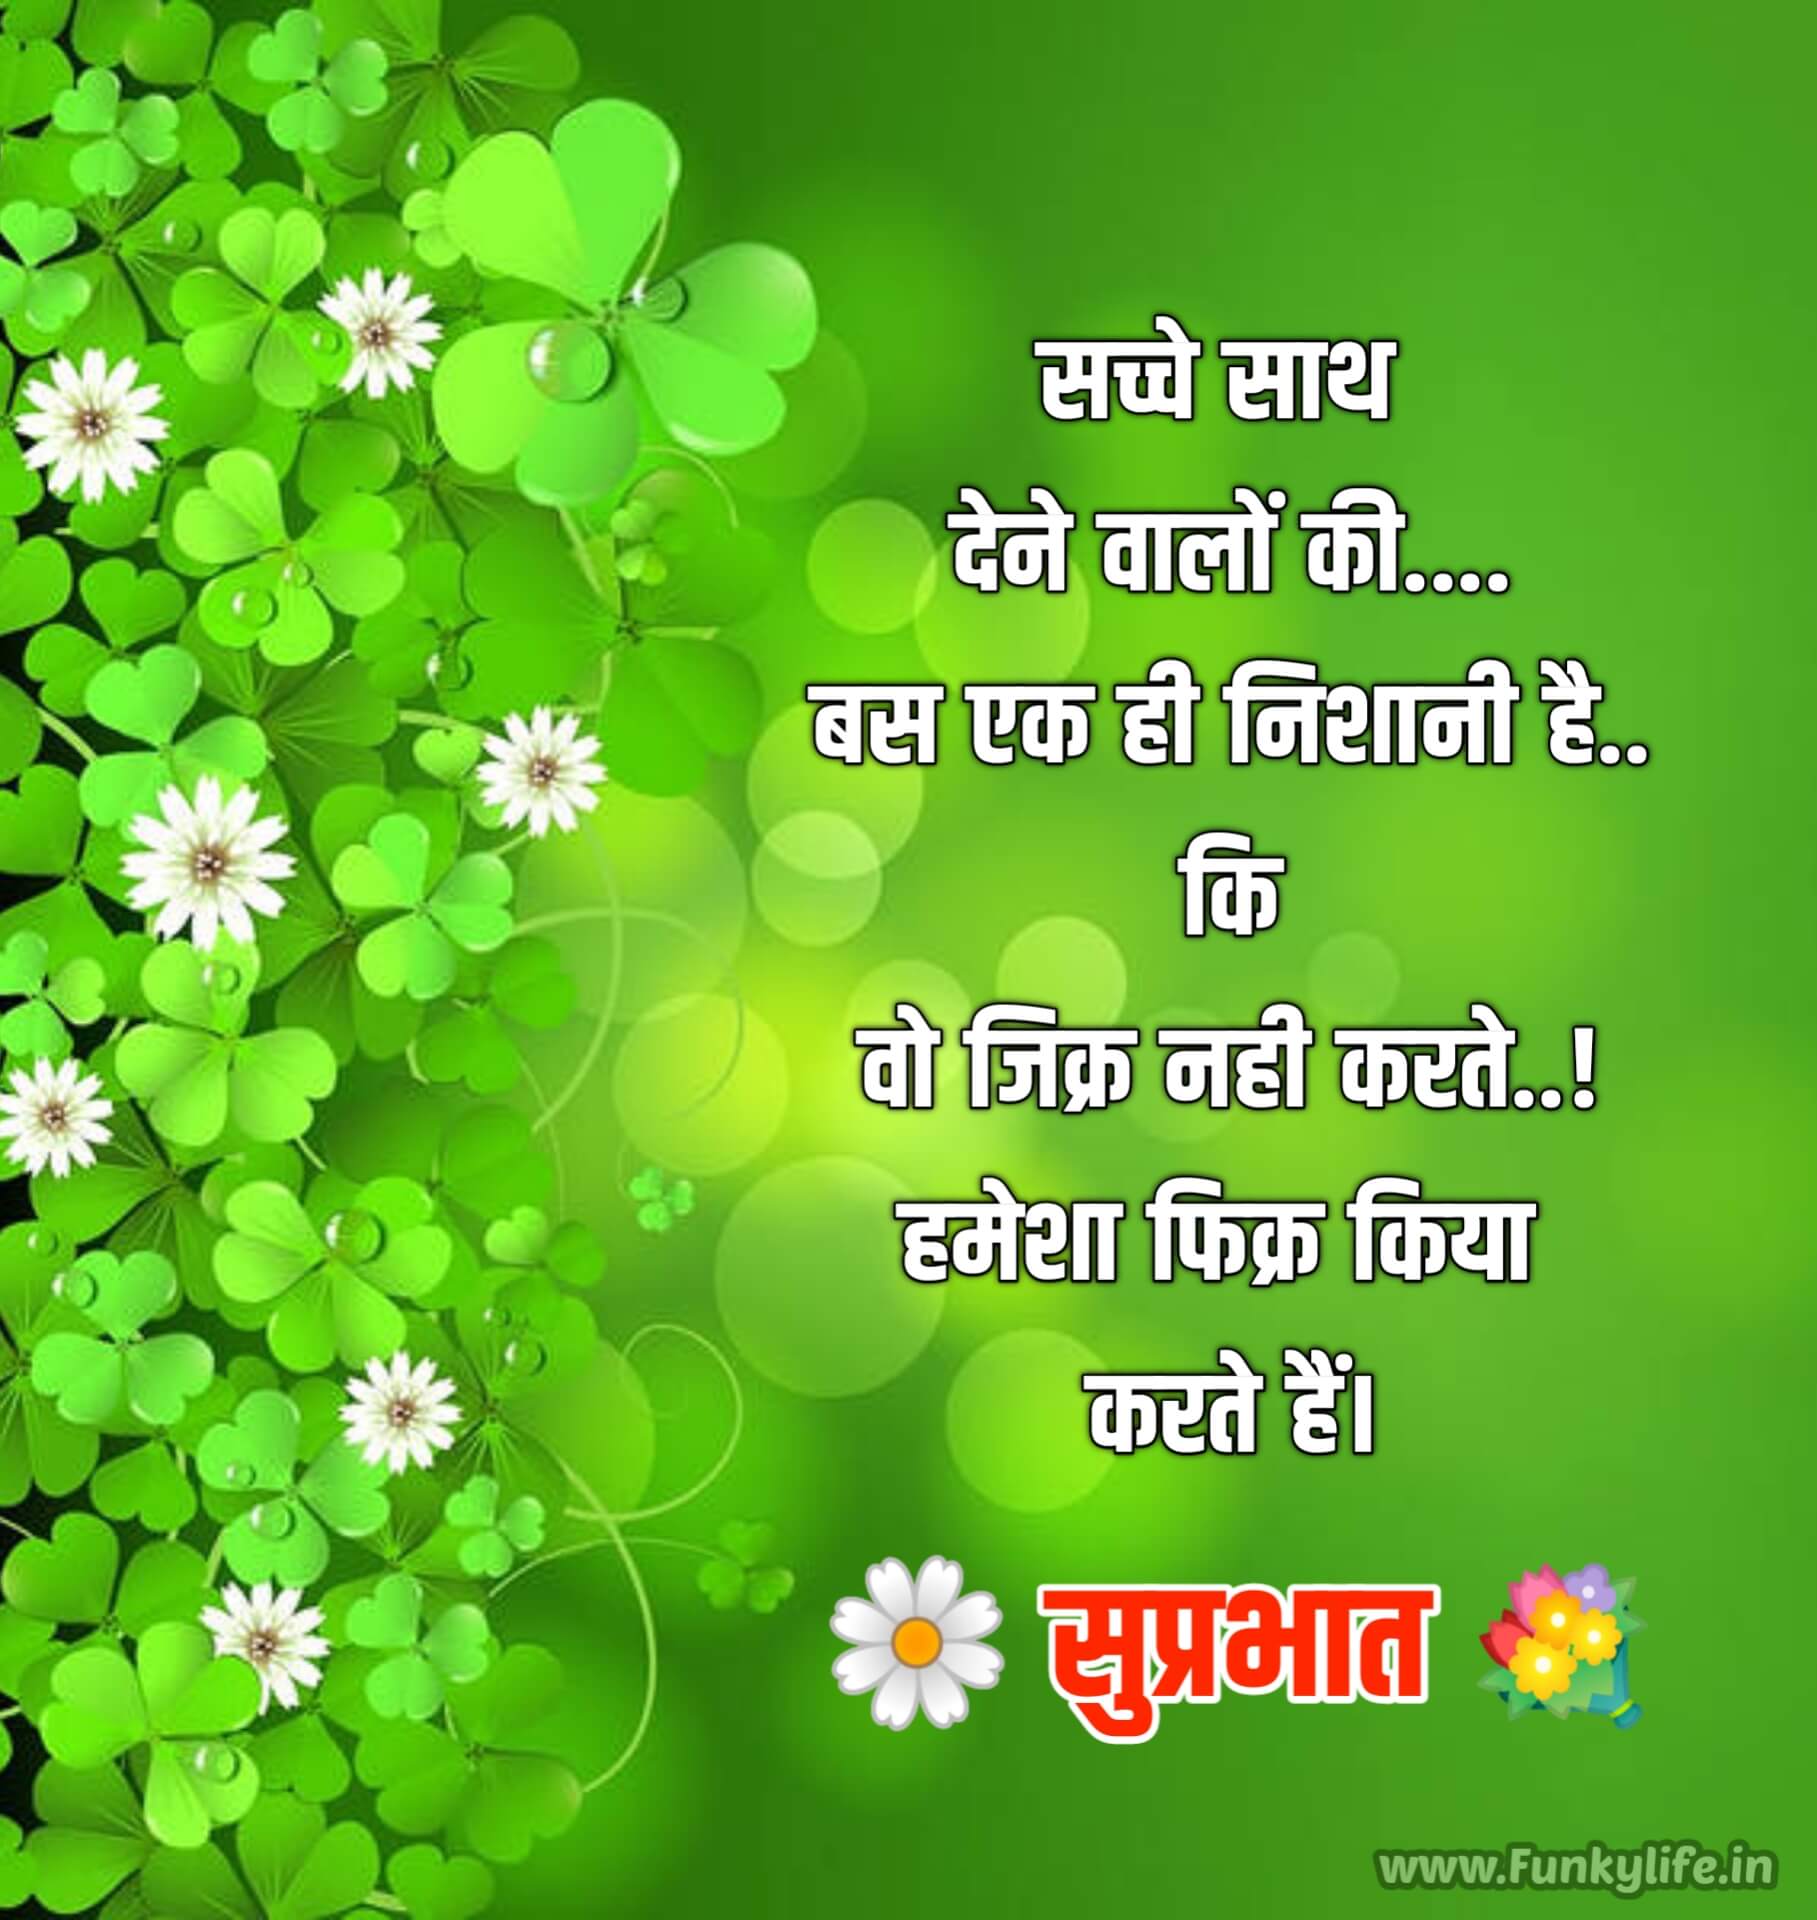 WhatsApp Good morning Suvichar in Hindi